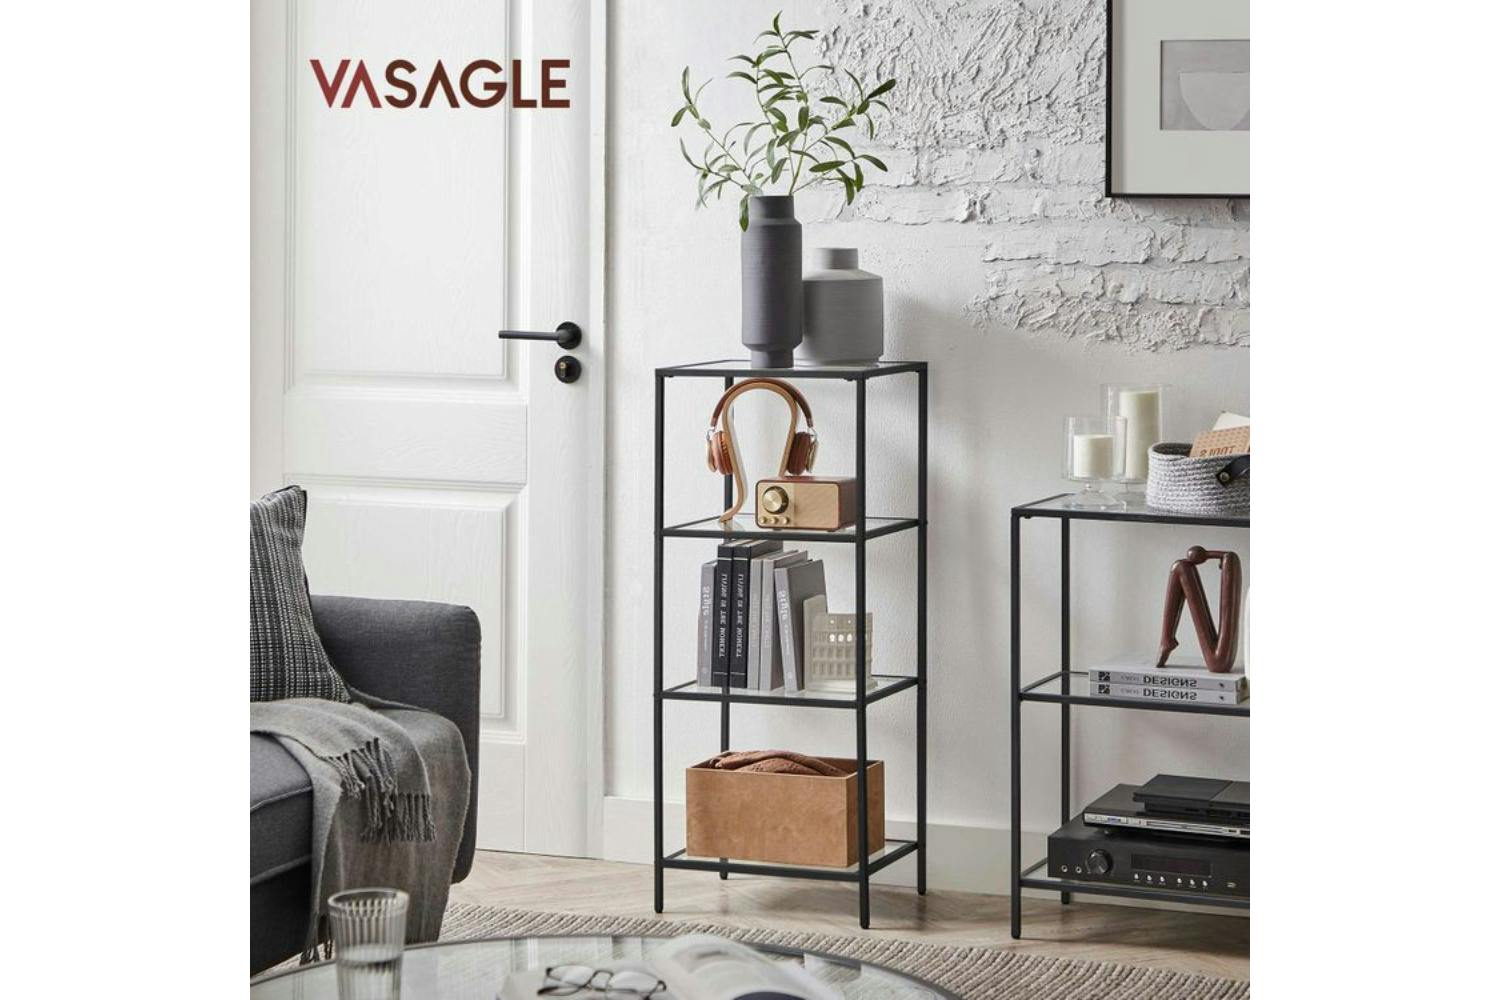 Vasagle LGT028B61 Standing Shelf with 4 Shelves Made of Black Tempered Glass